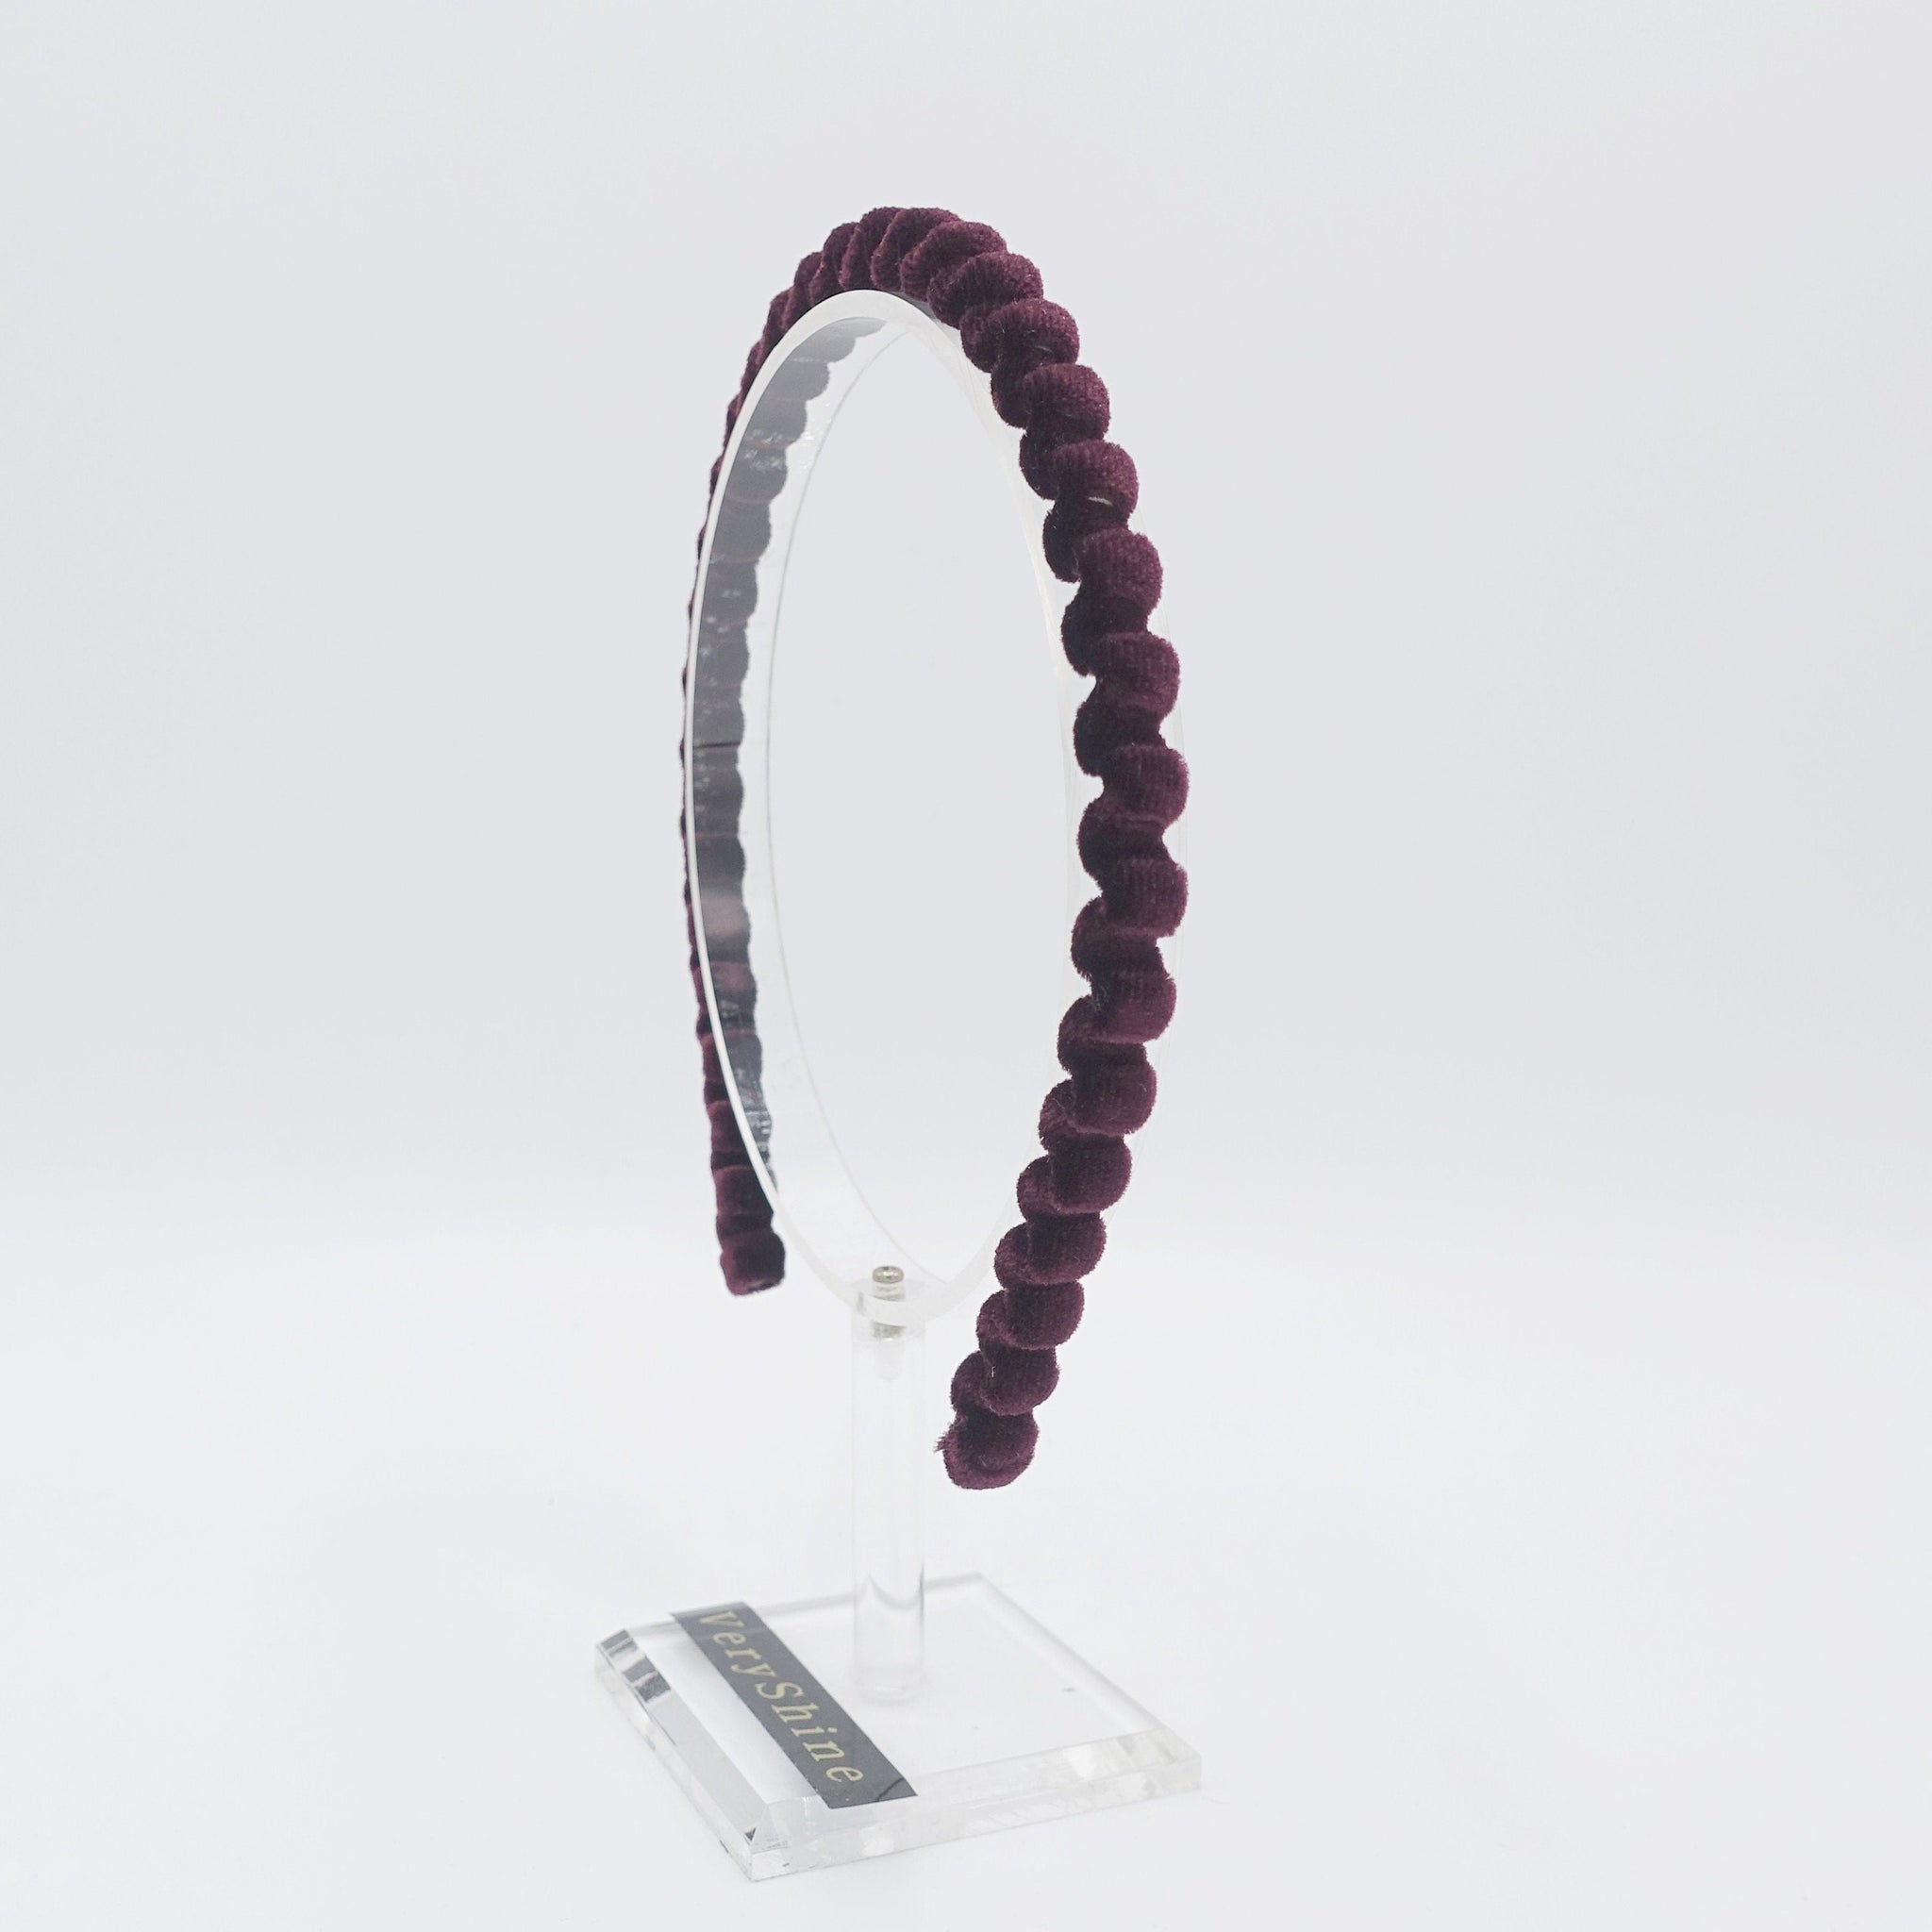 veryshine.com Headband Red wine velvet gear headband thin metal hairband for women